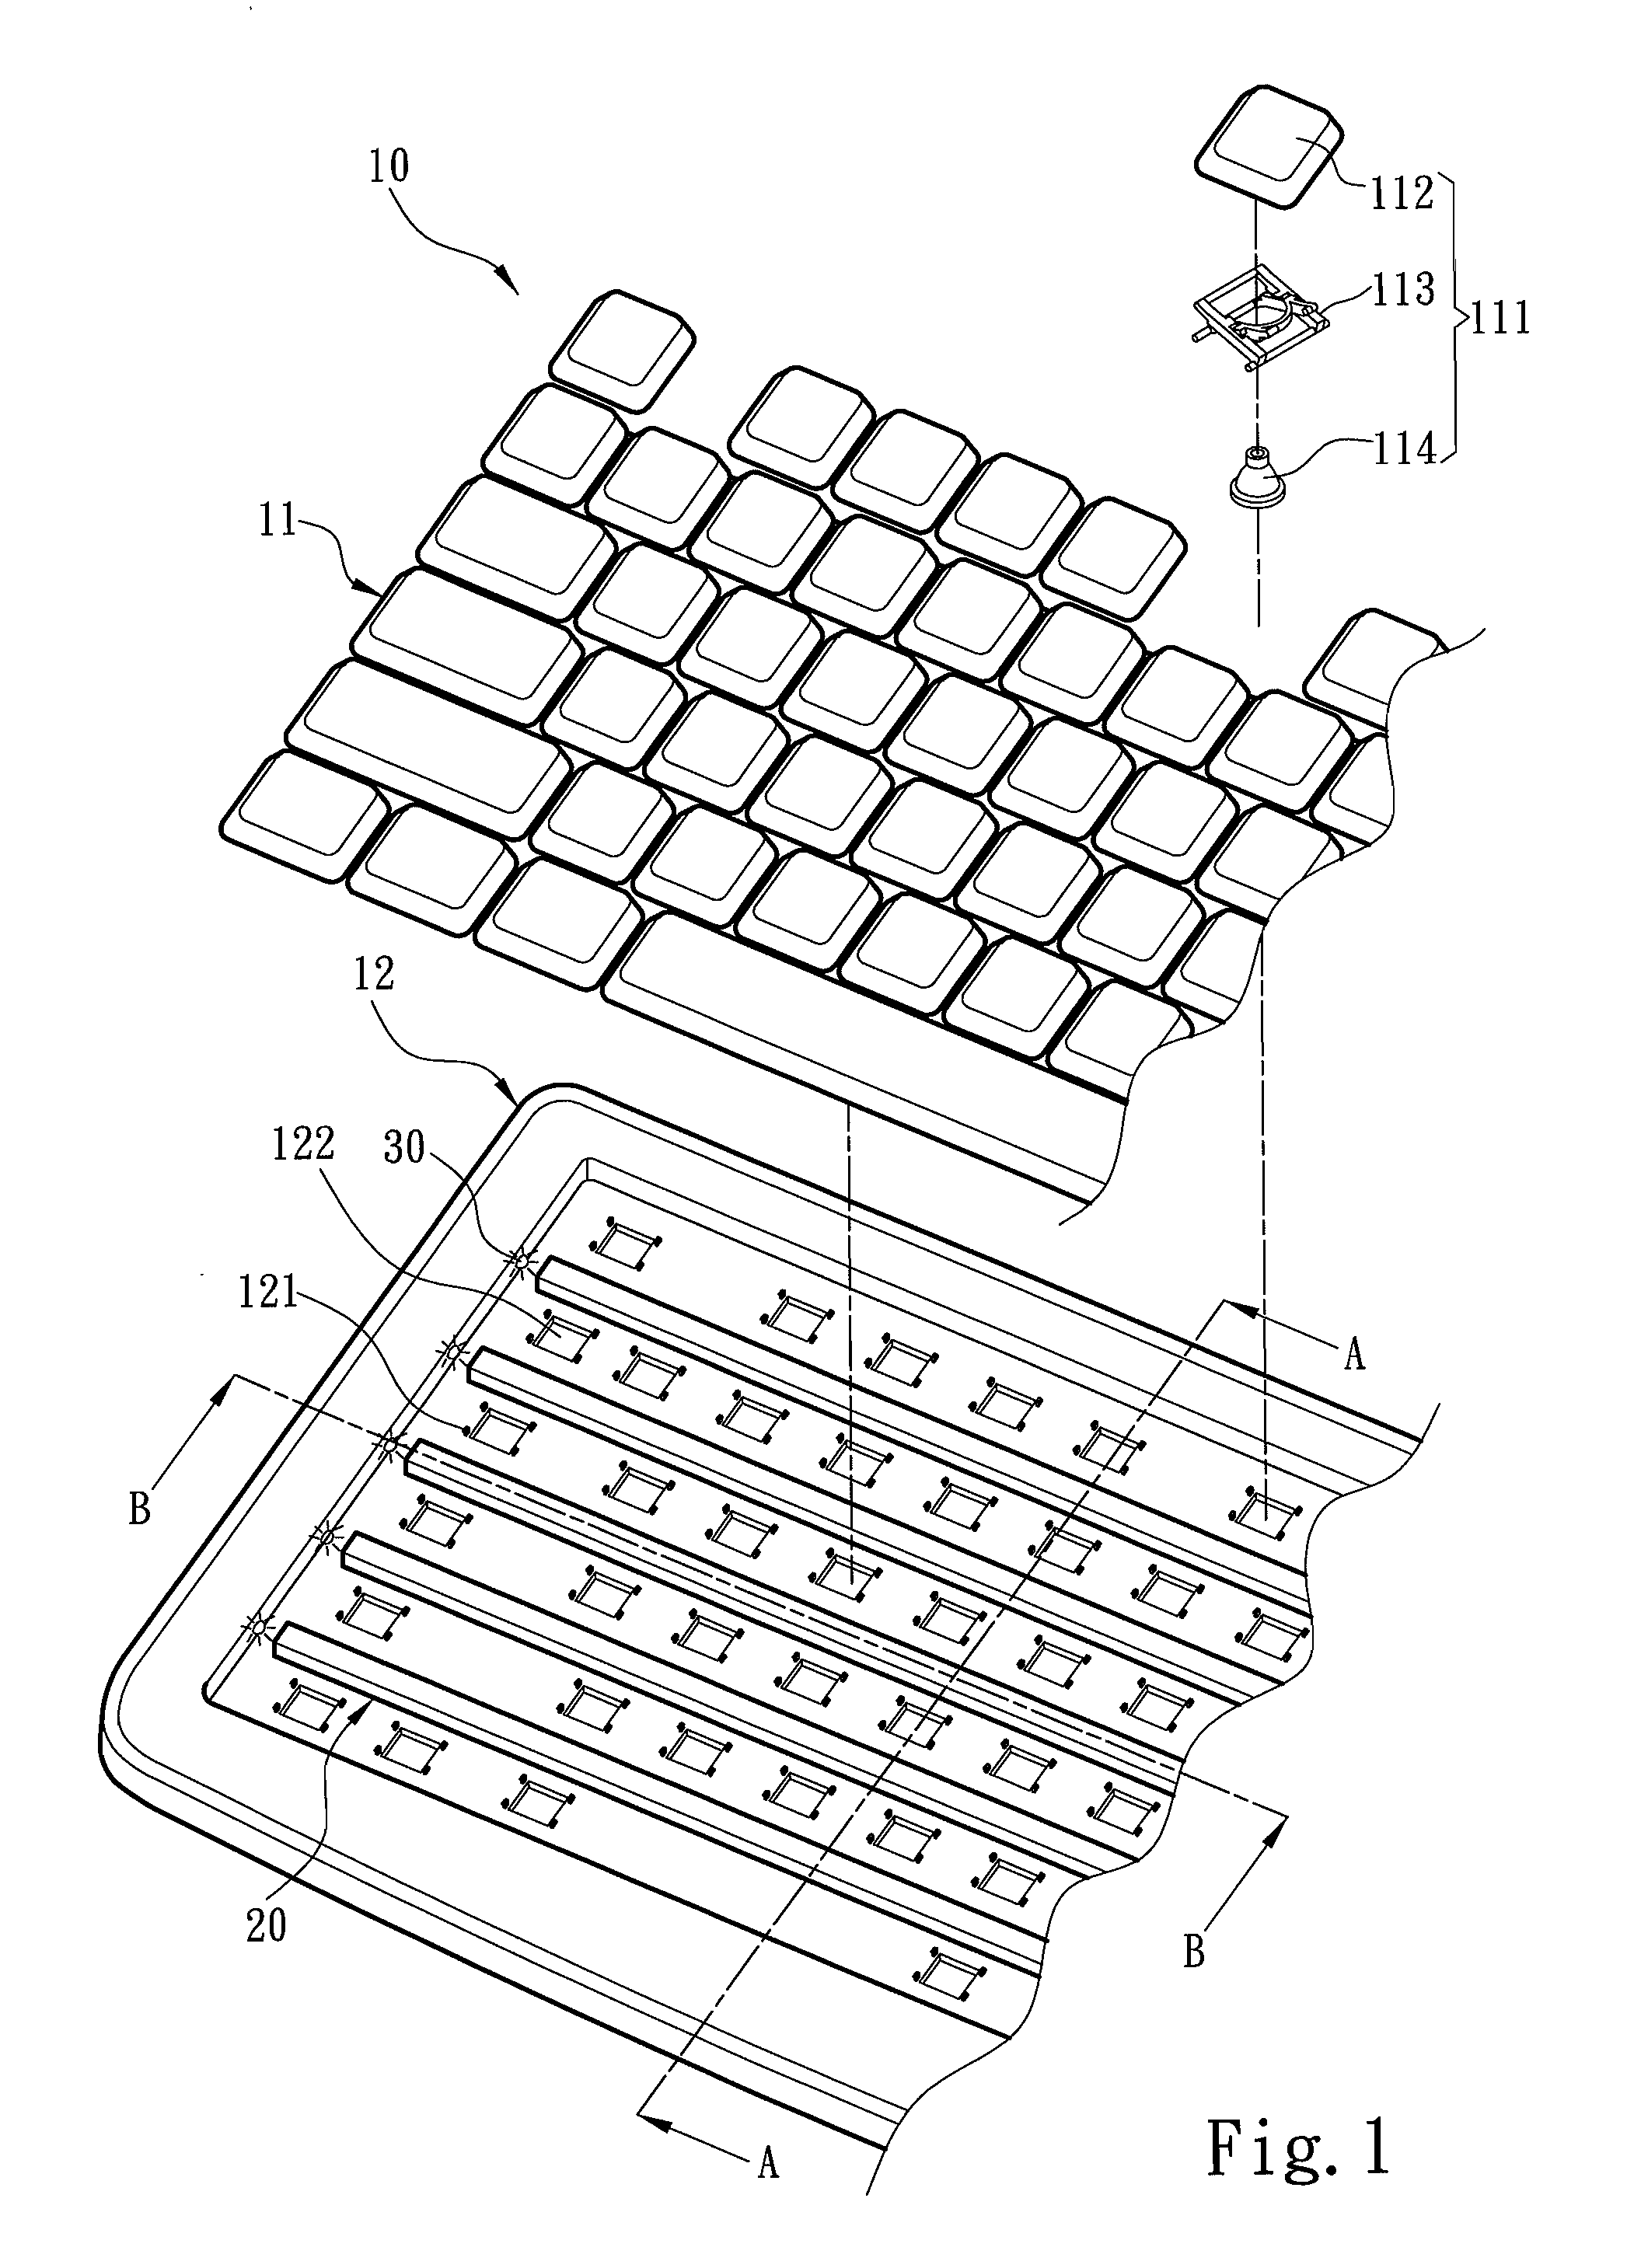 Illuminated keyboard providing high and uniform luminosity